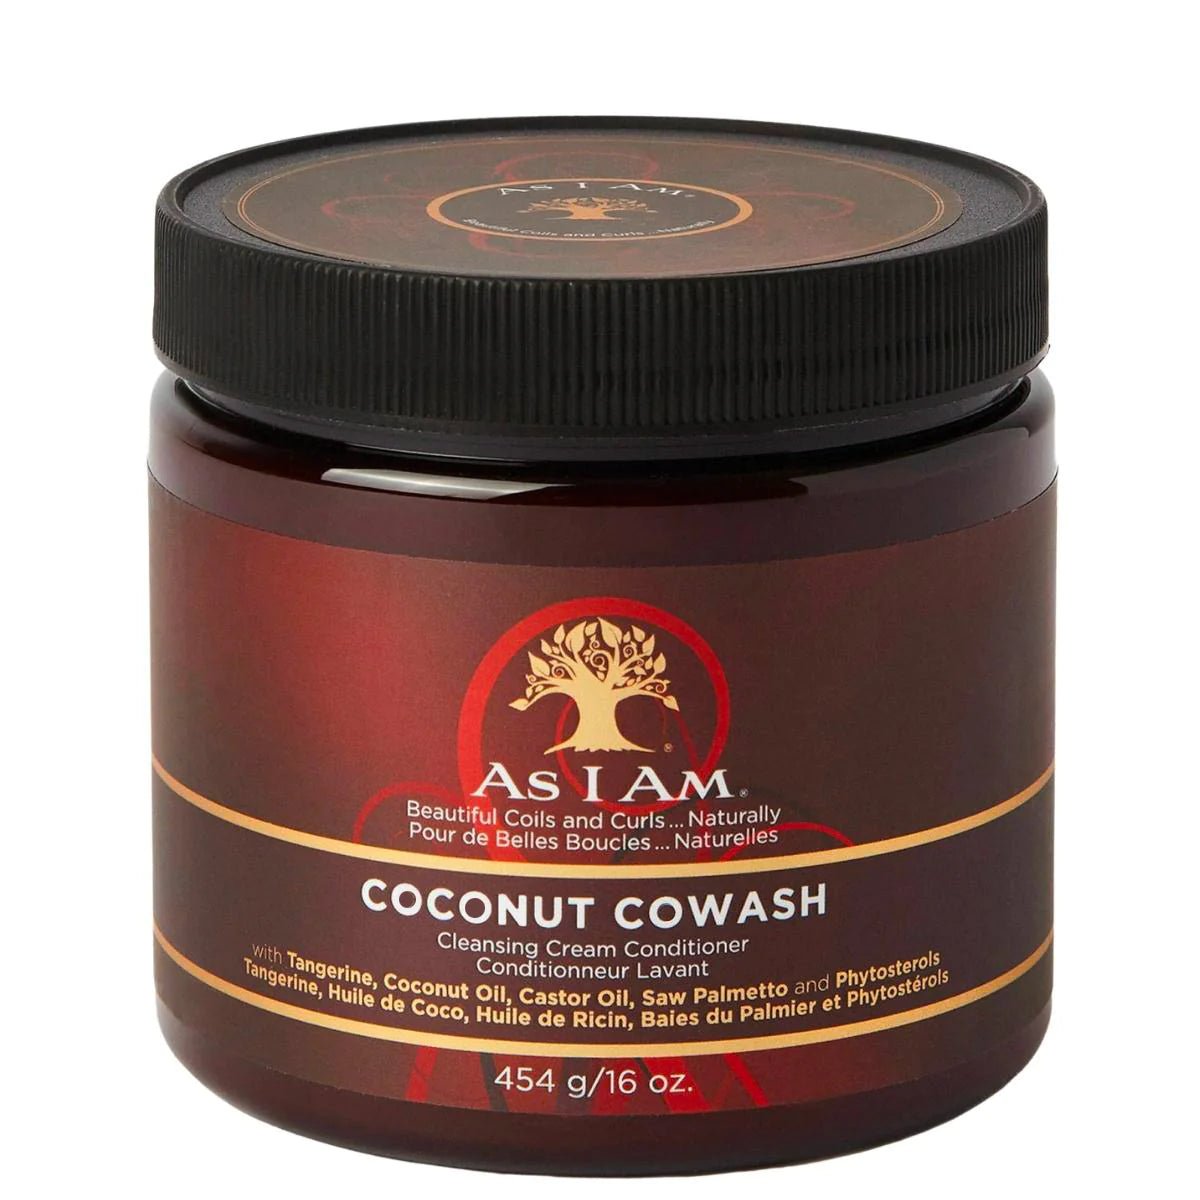 As I am - Classic - Coconut Cowash | DjieFall